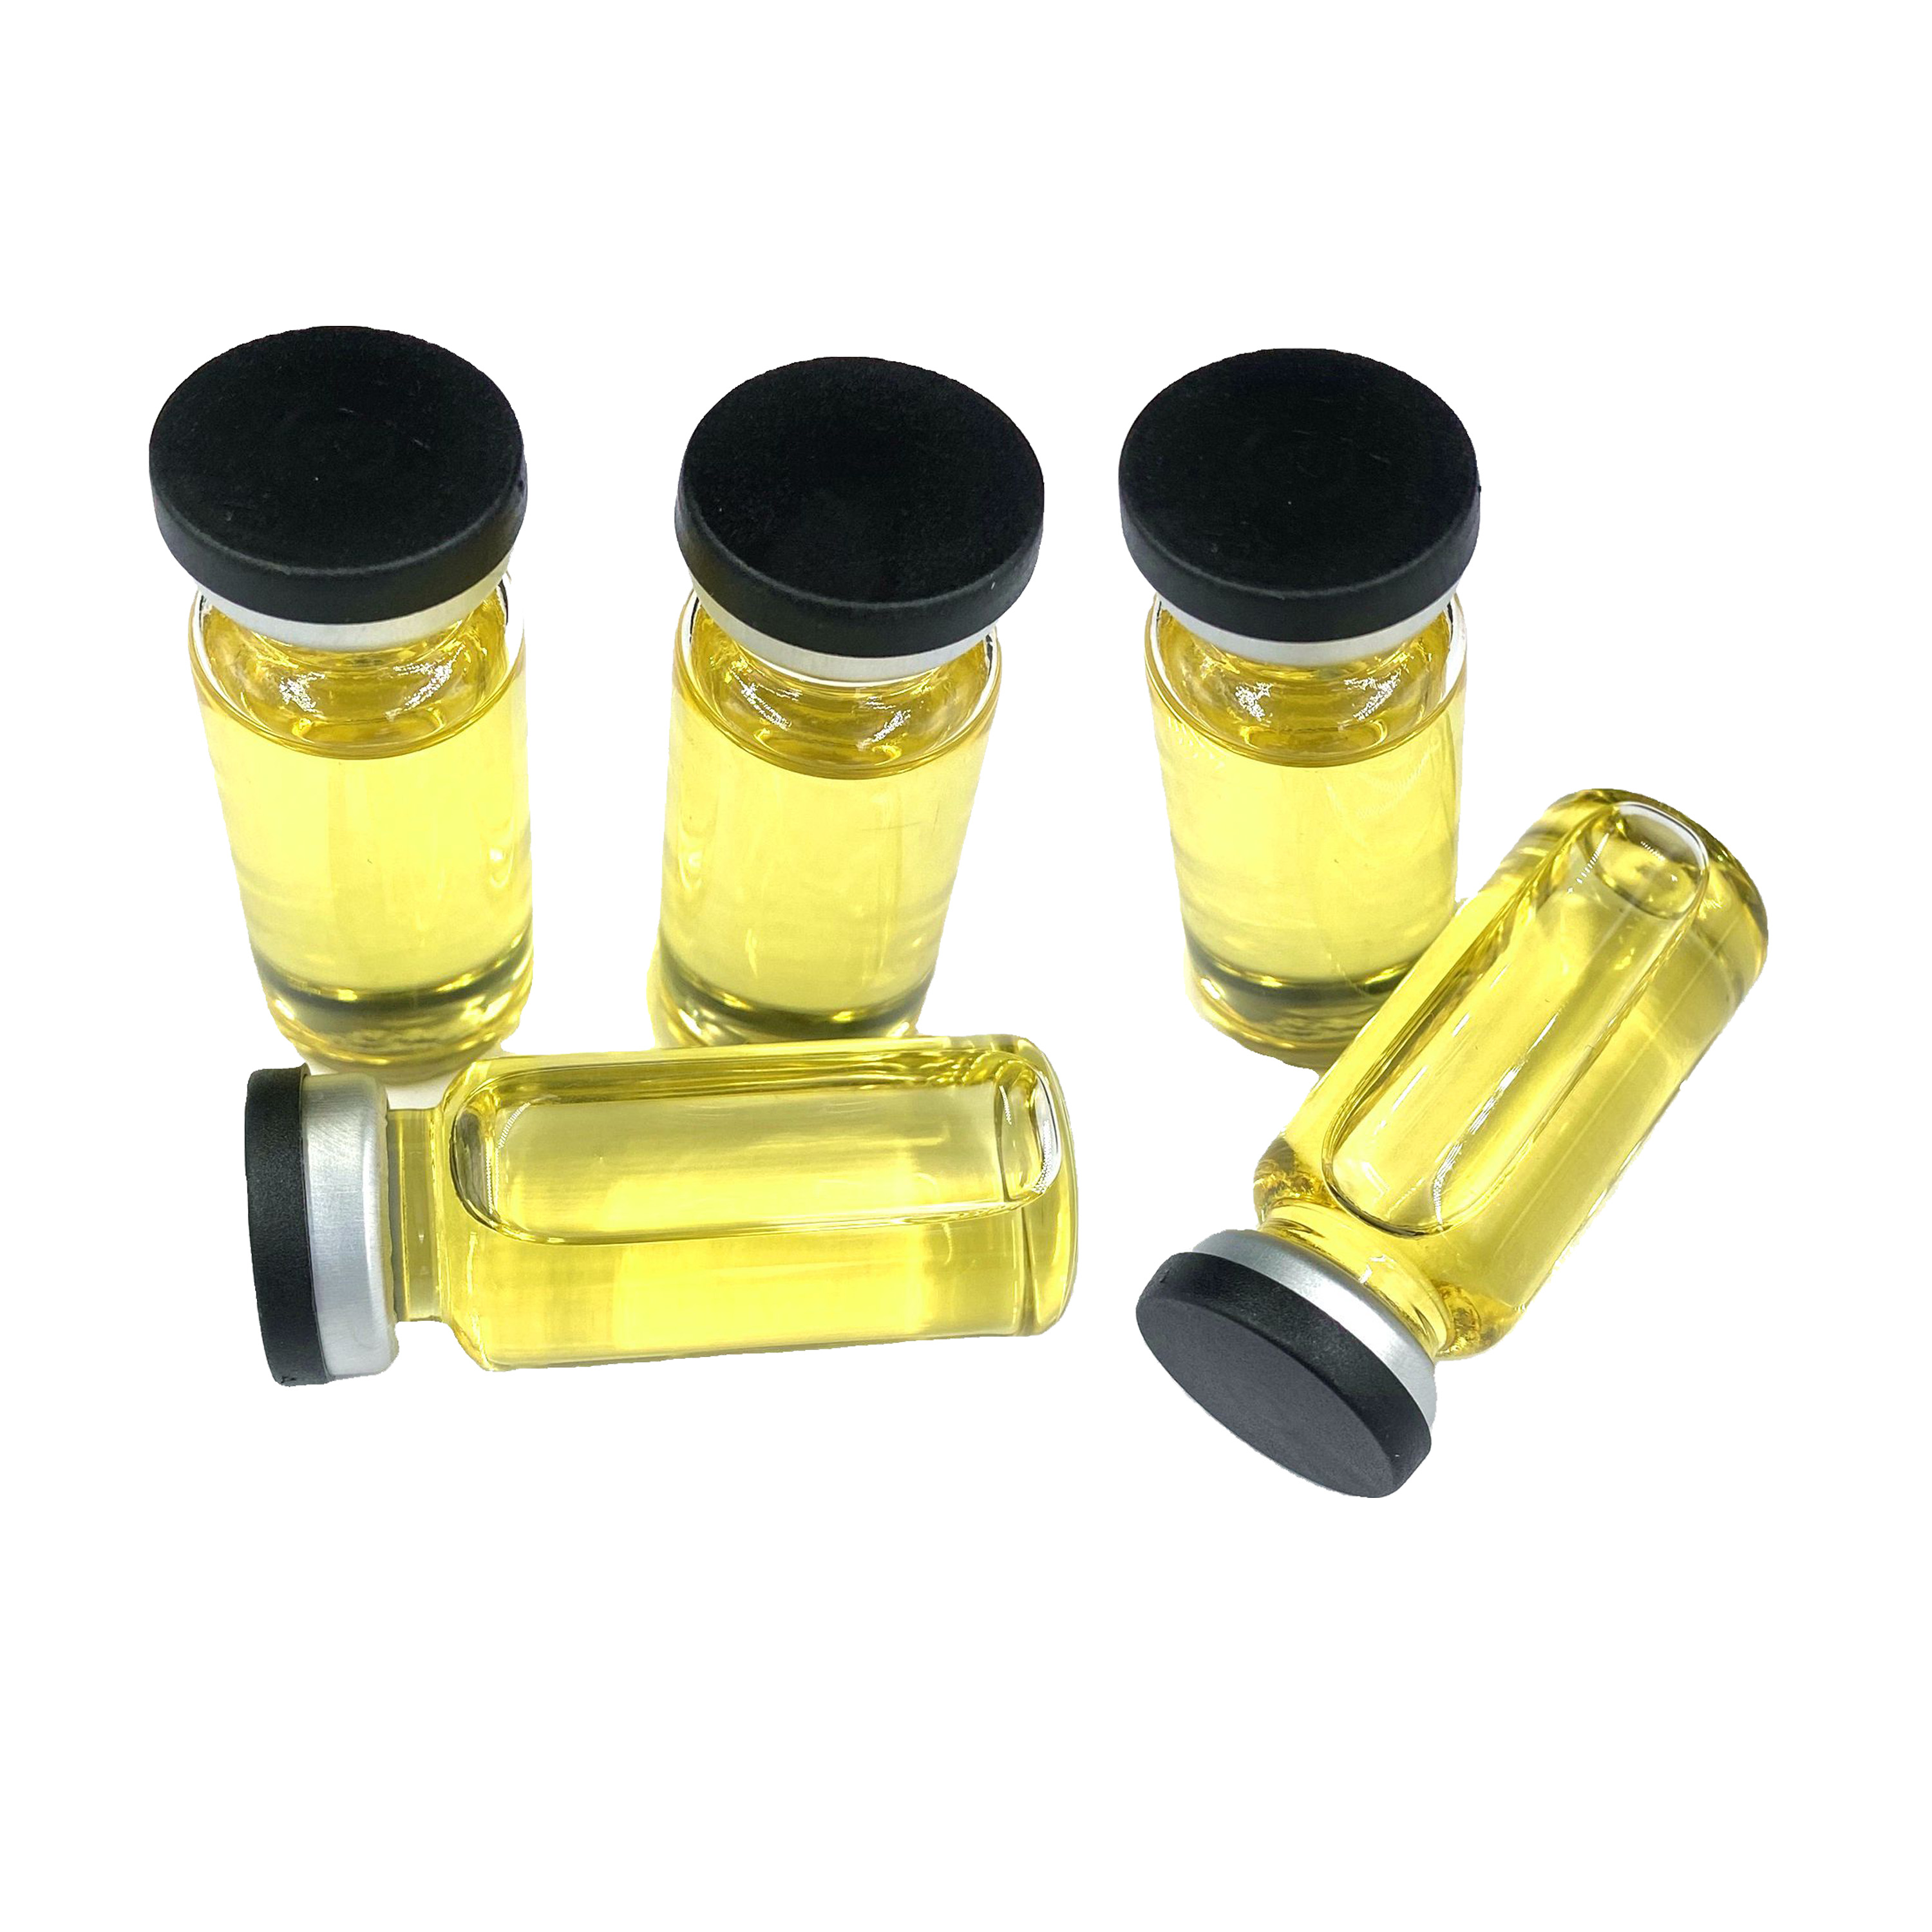 sterodis bodybuilding olja ripex-225 10ml/flaska färdig olja